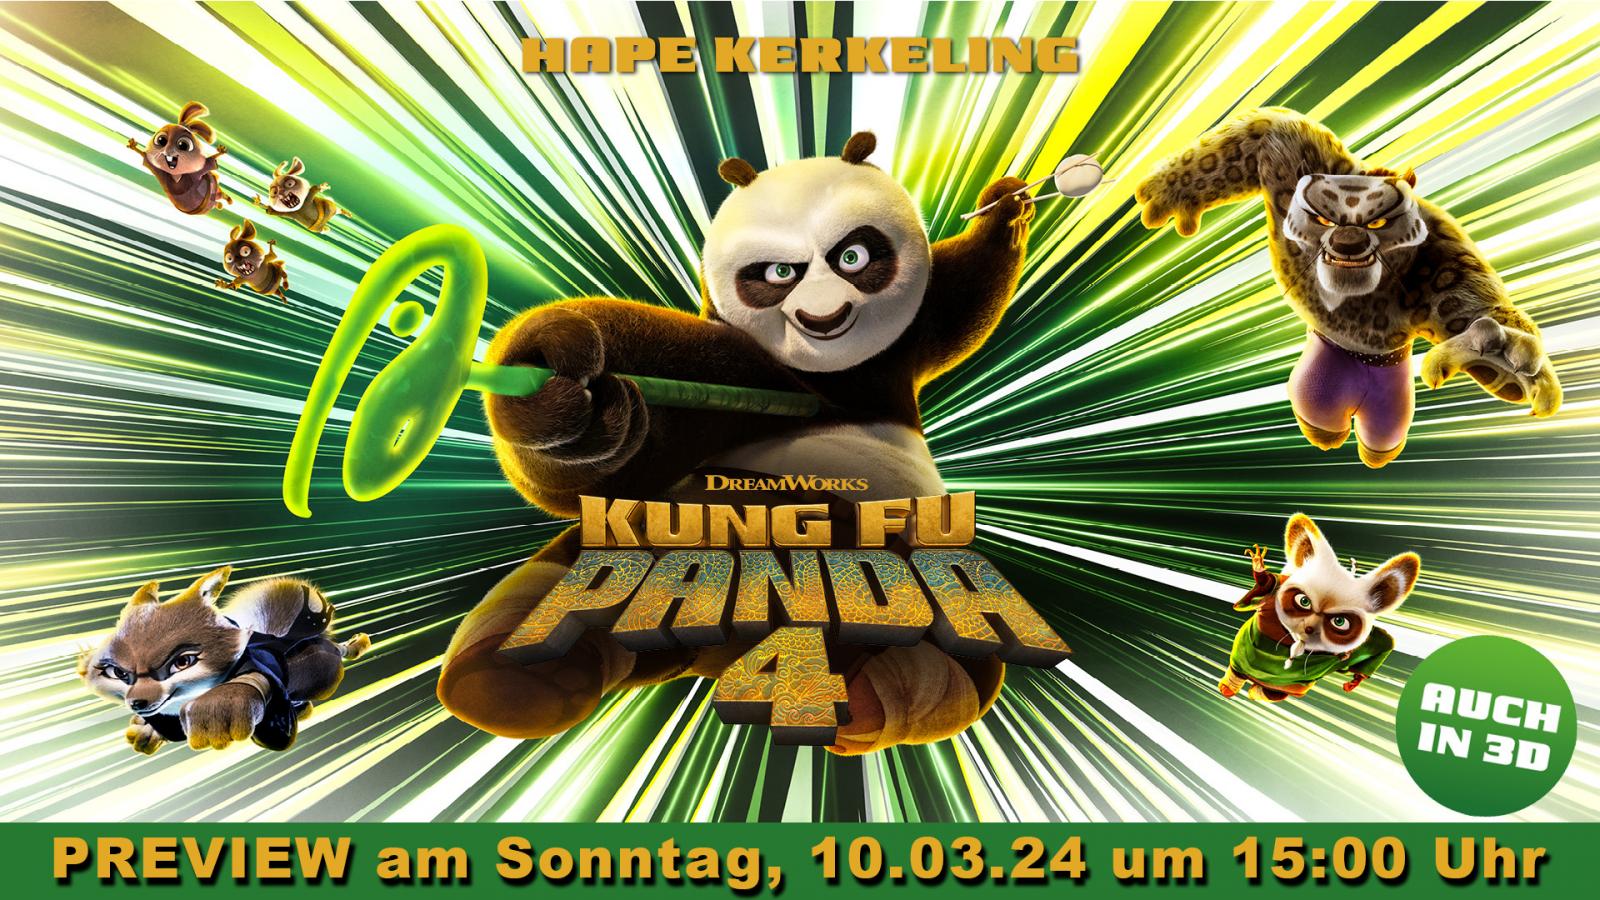 PREVIEW: "Kung Fu Panda 4"